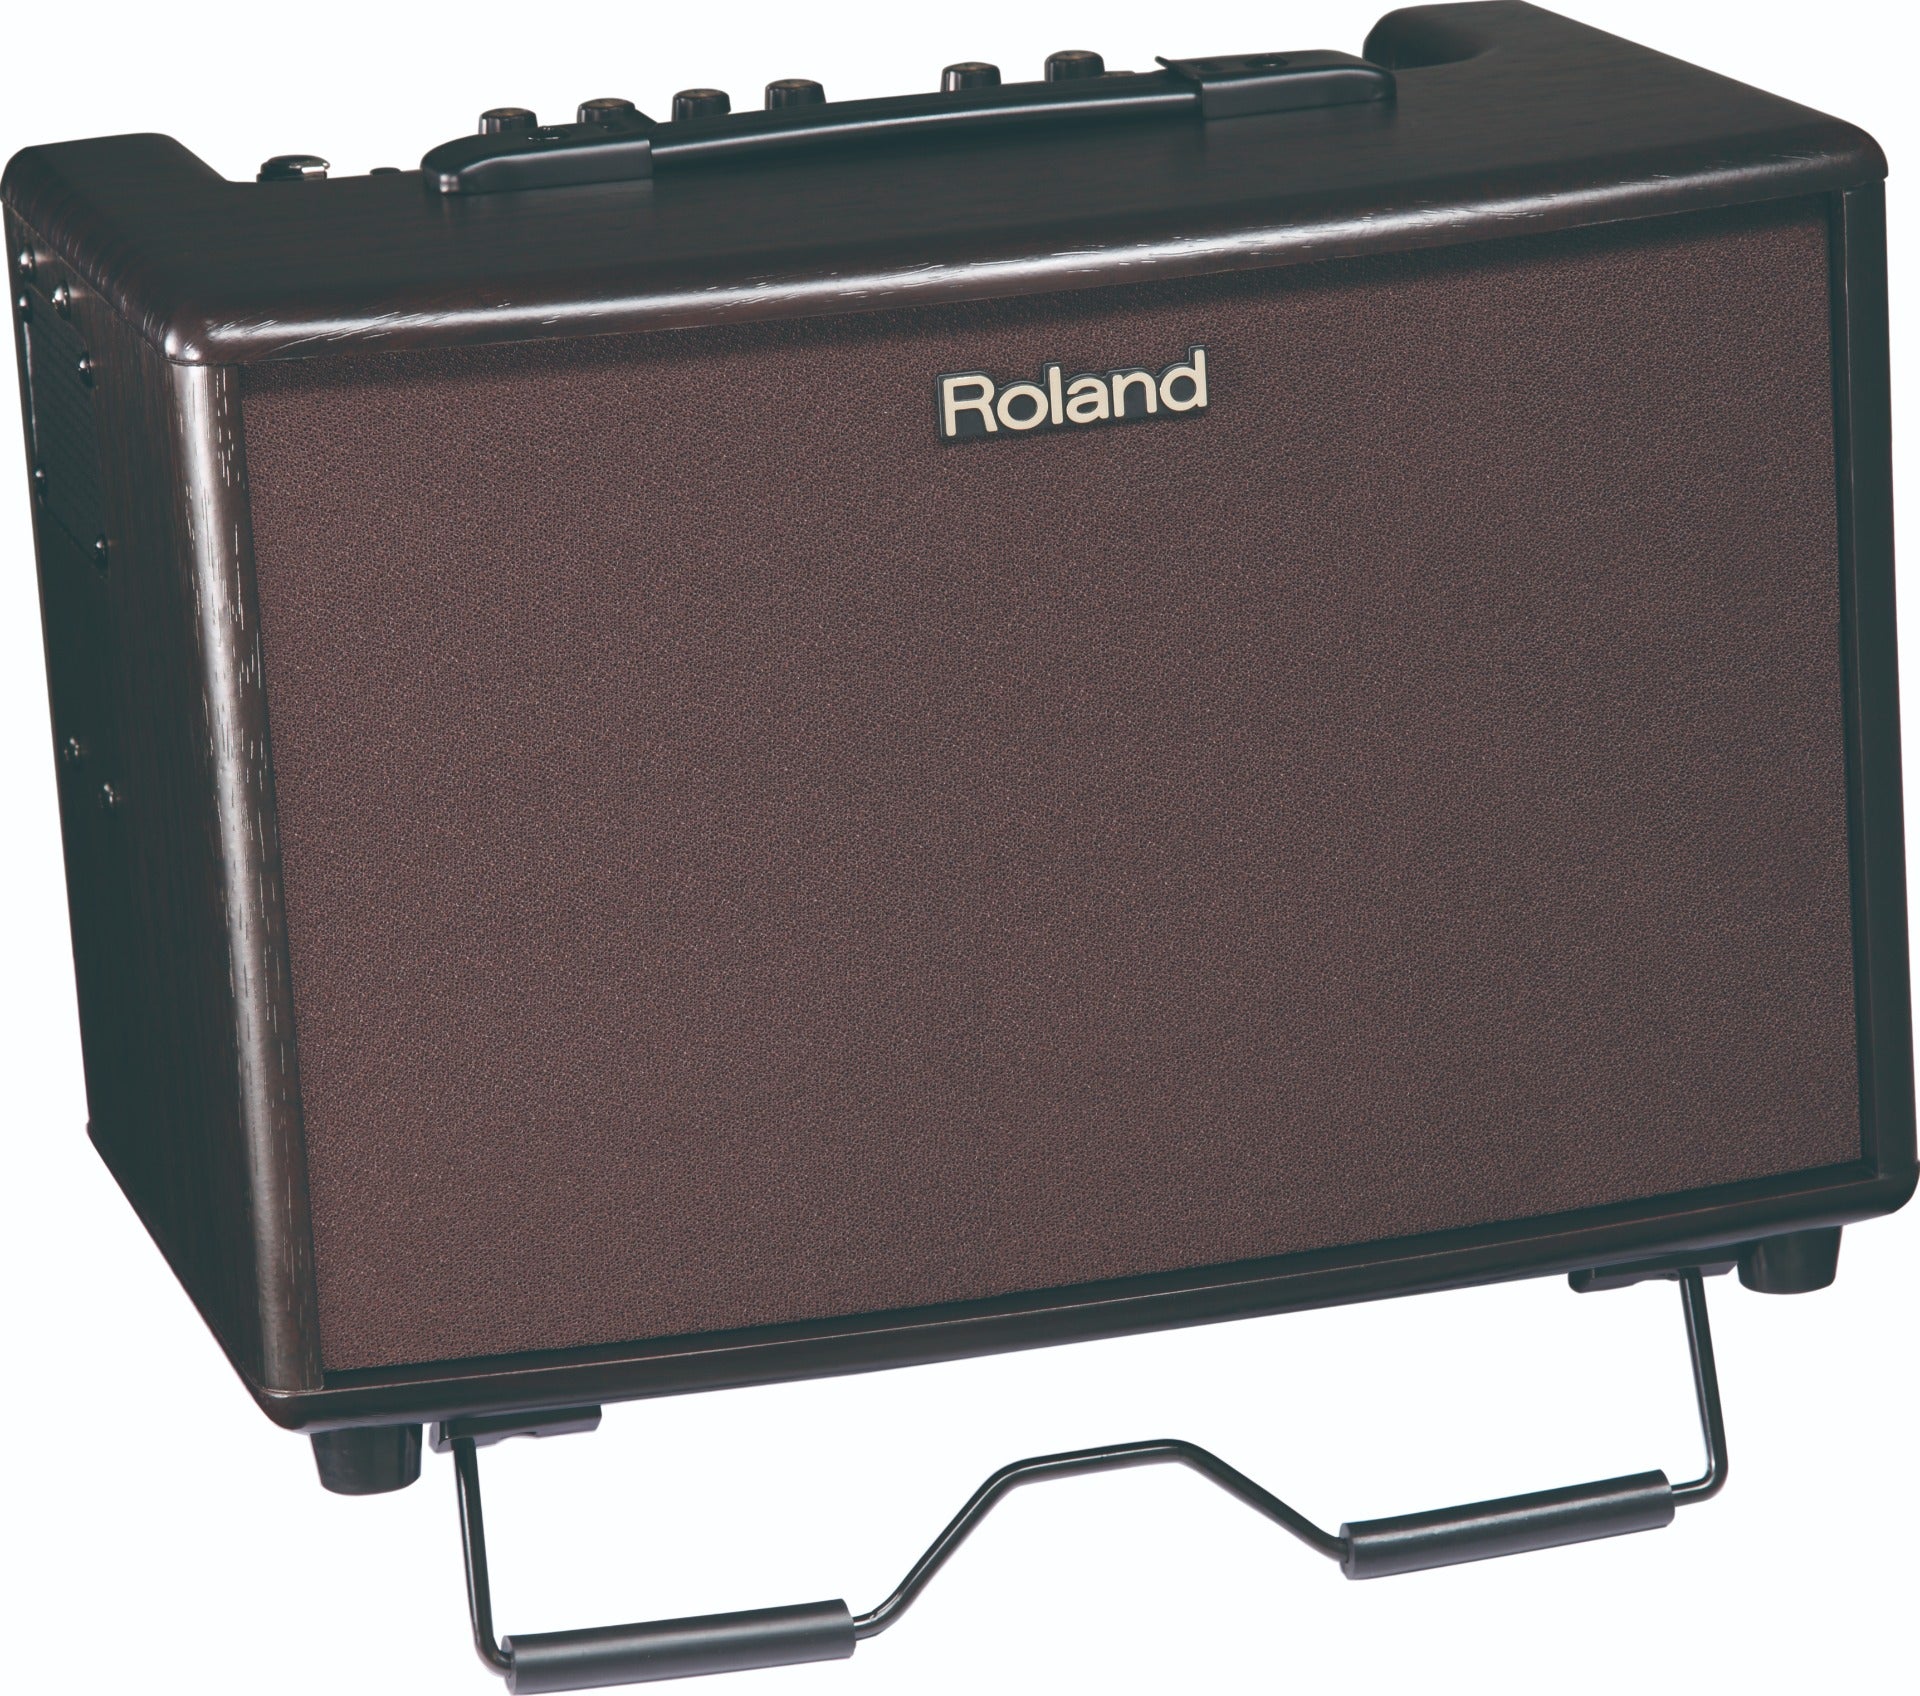 206 Roland ローランド AC-60 アコースティックギターアンプ - アンプ